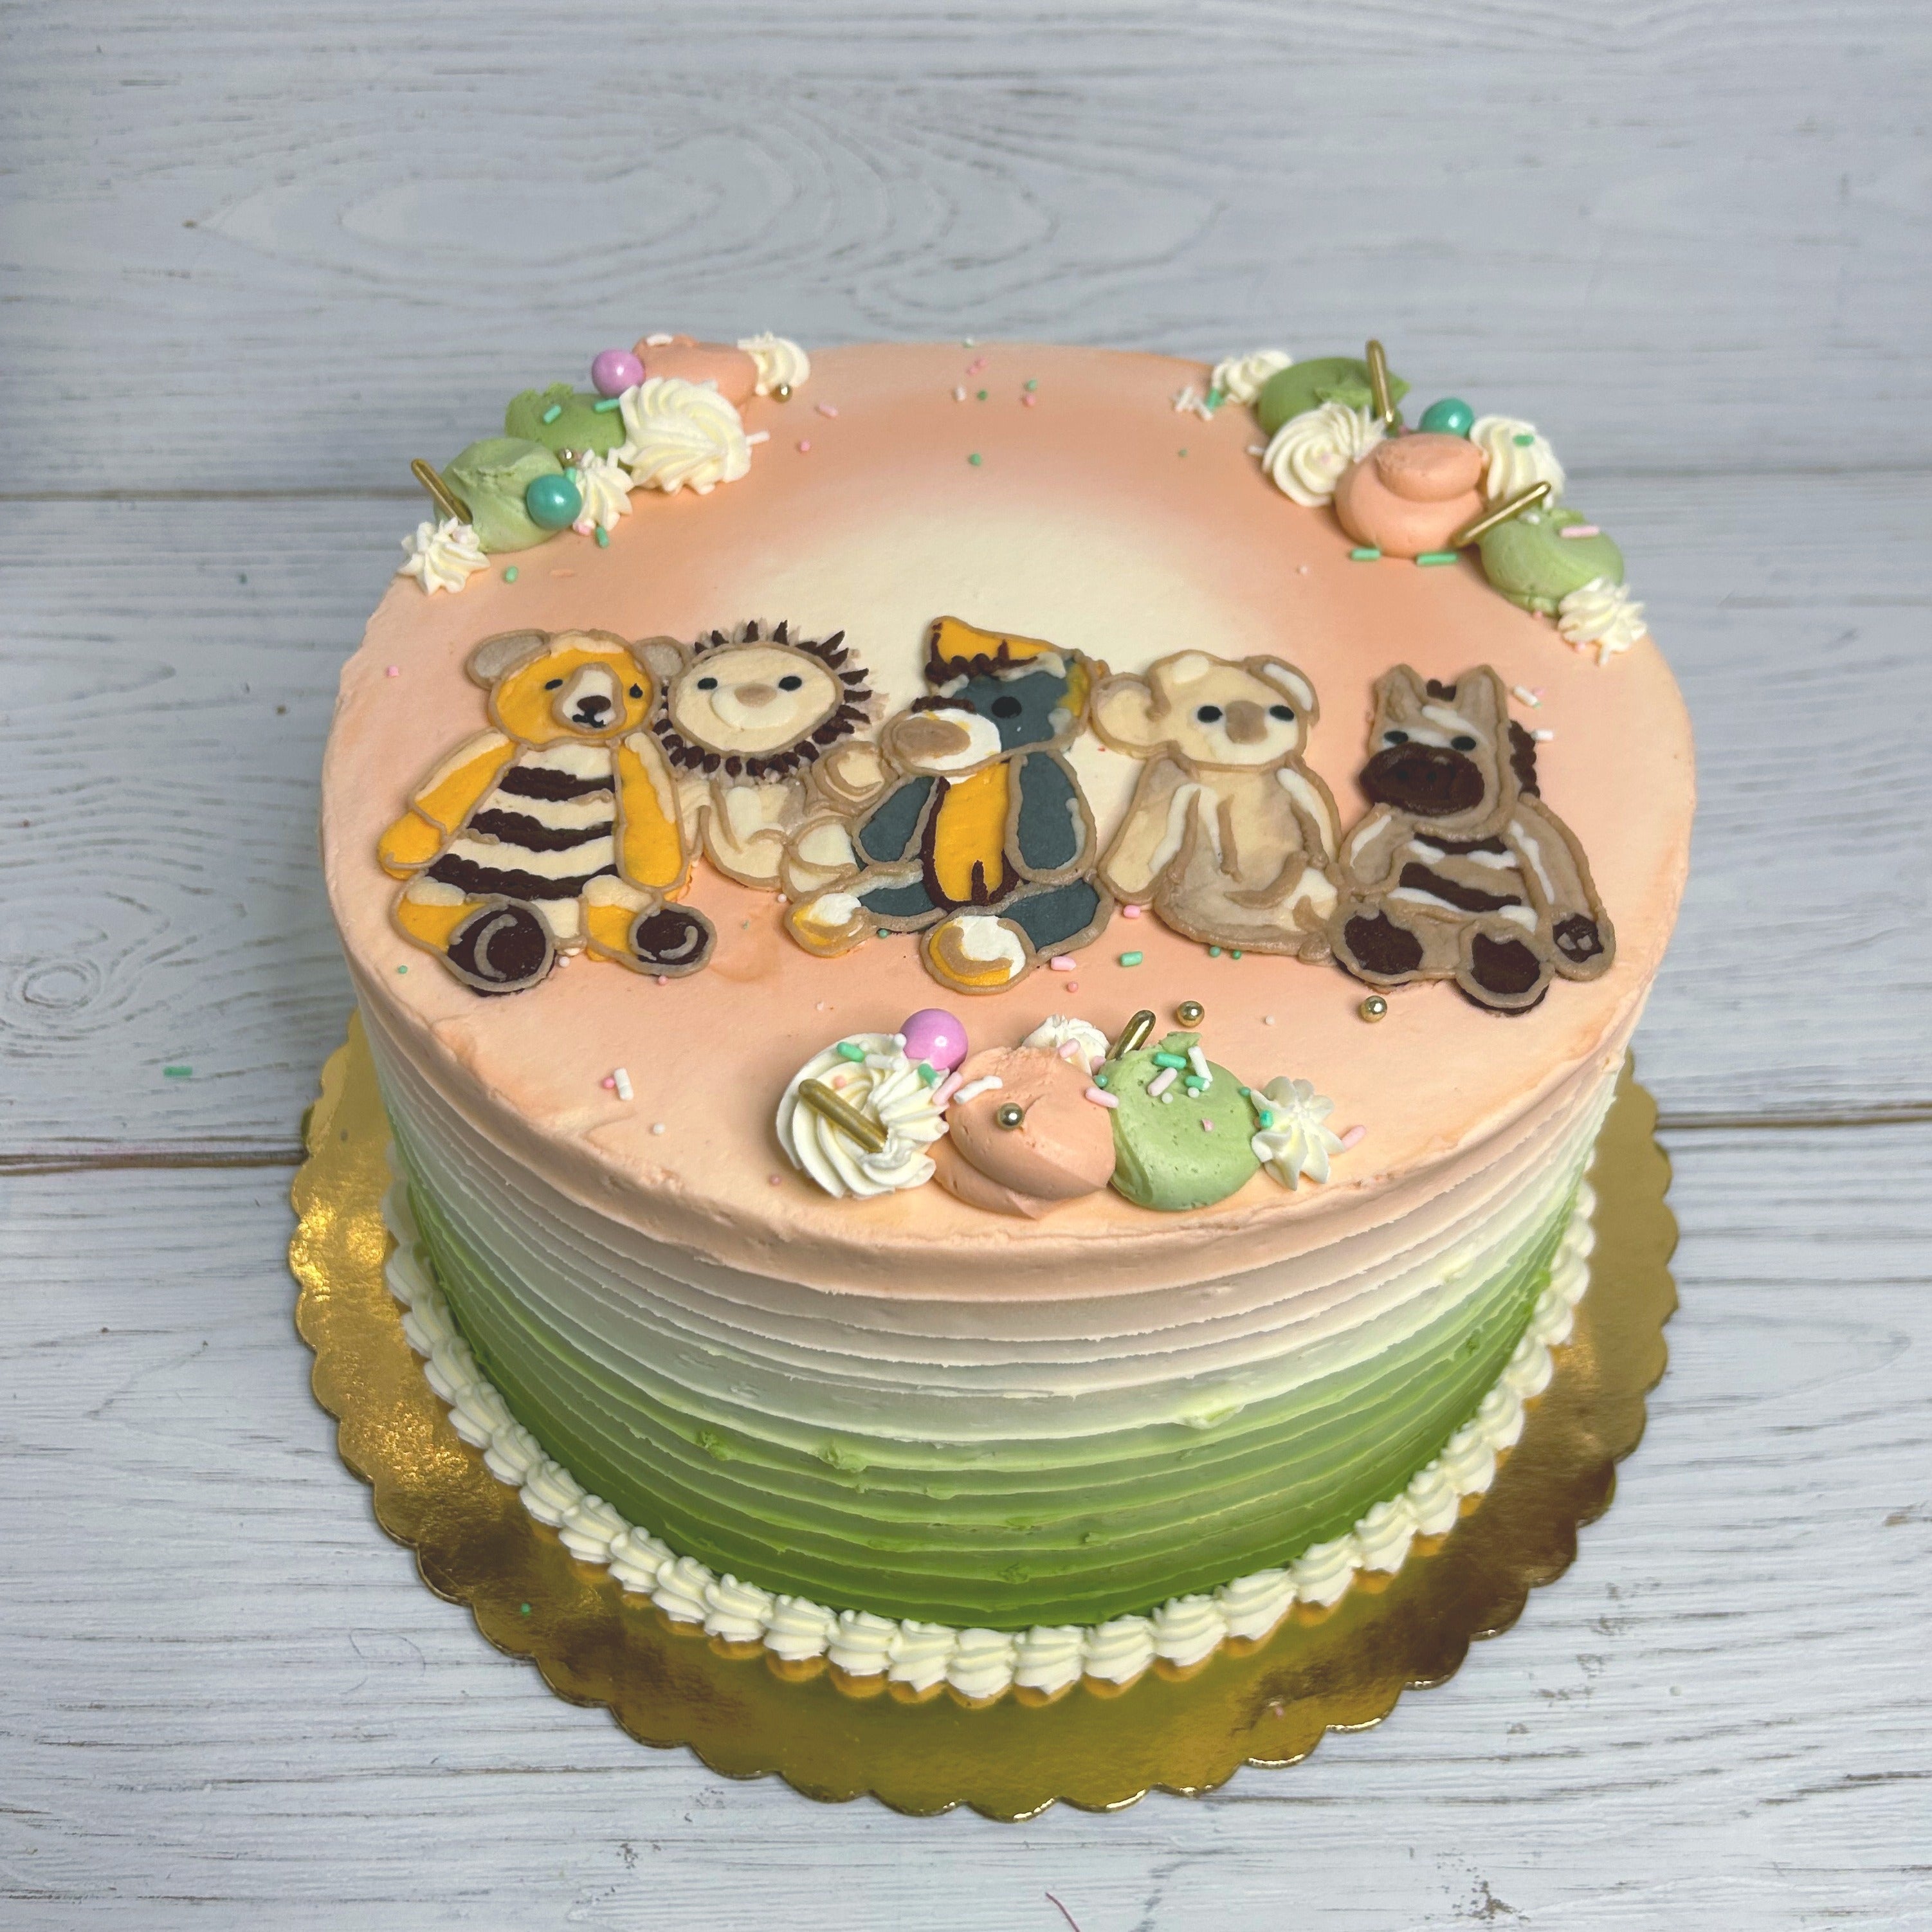 Surprise New Grandma Baby Cake - CakeCentral.com